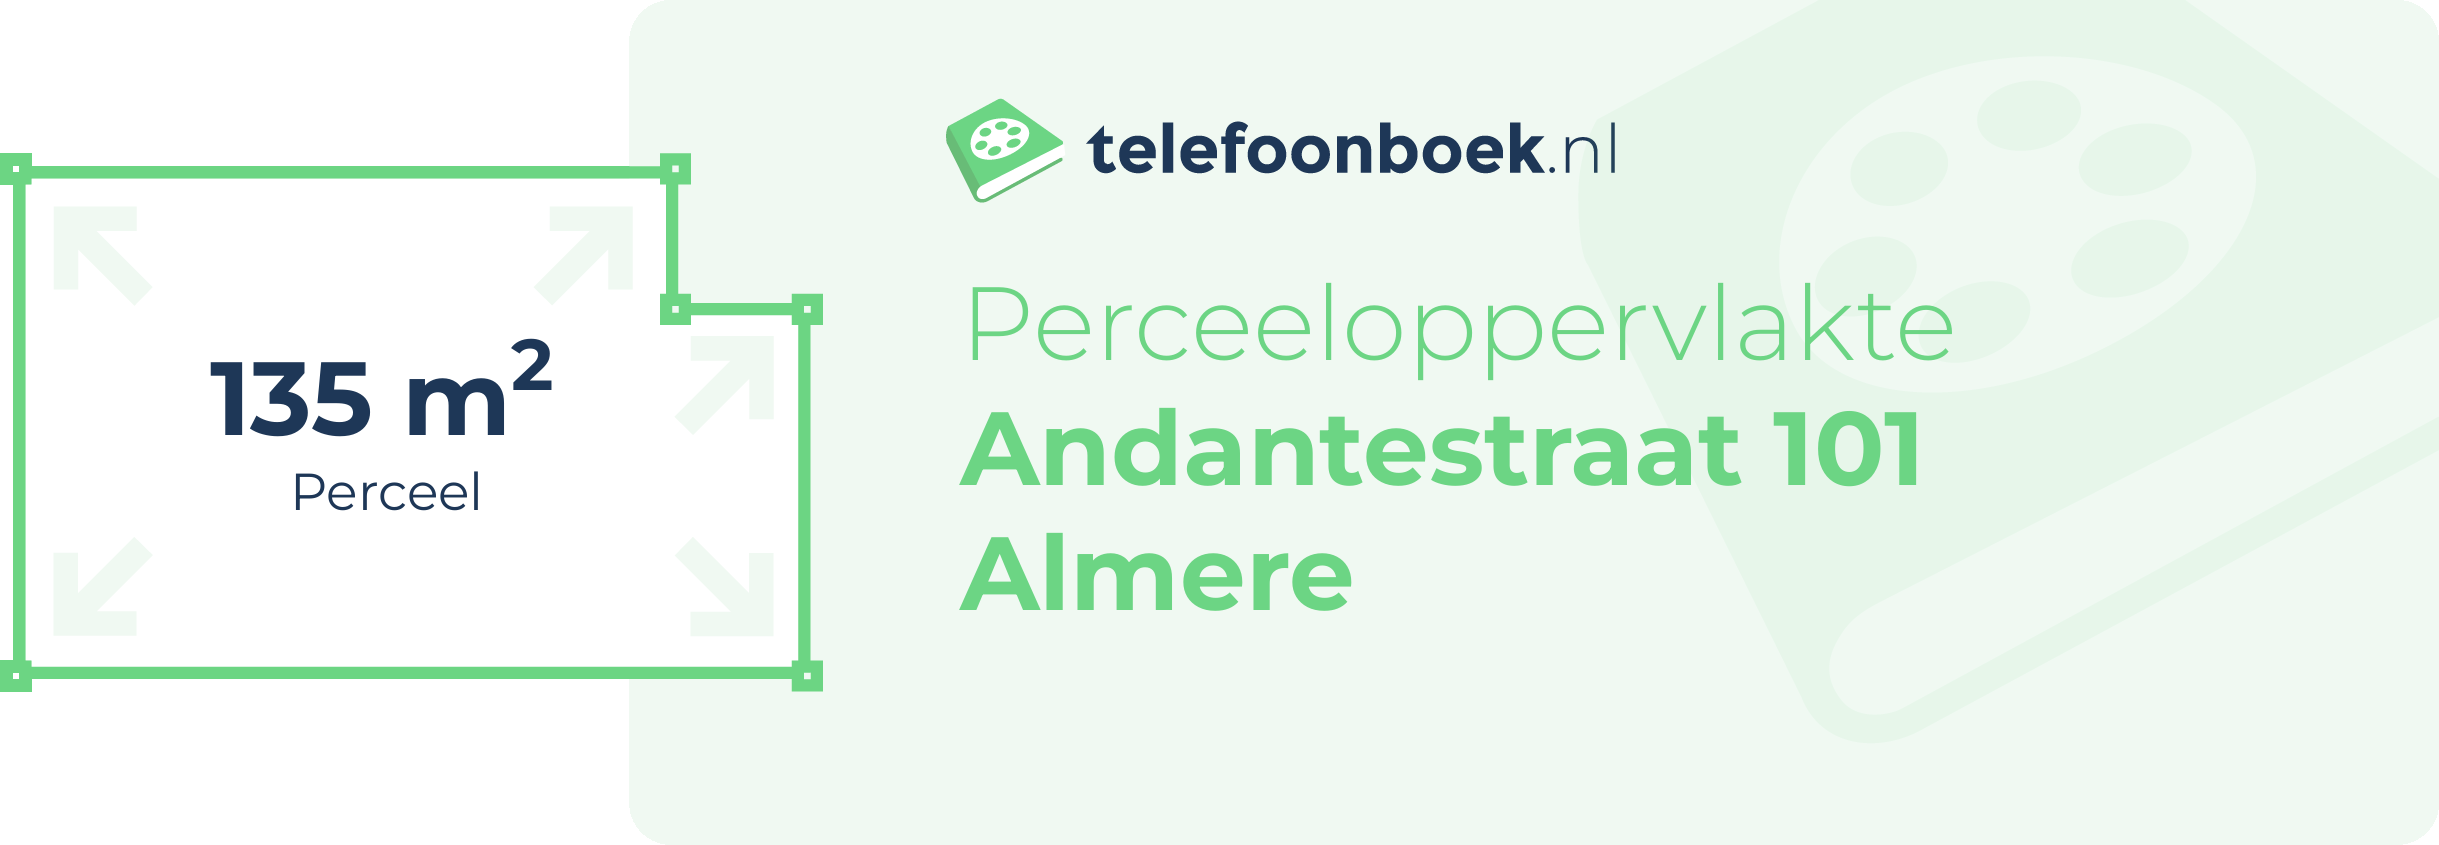 Perceeloppervlakte Andantestraat 101 Almere